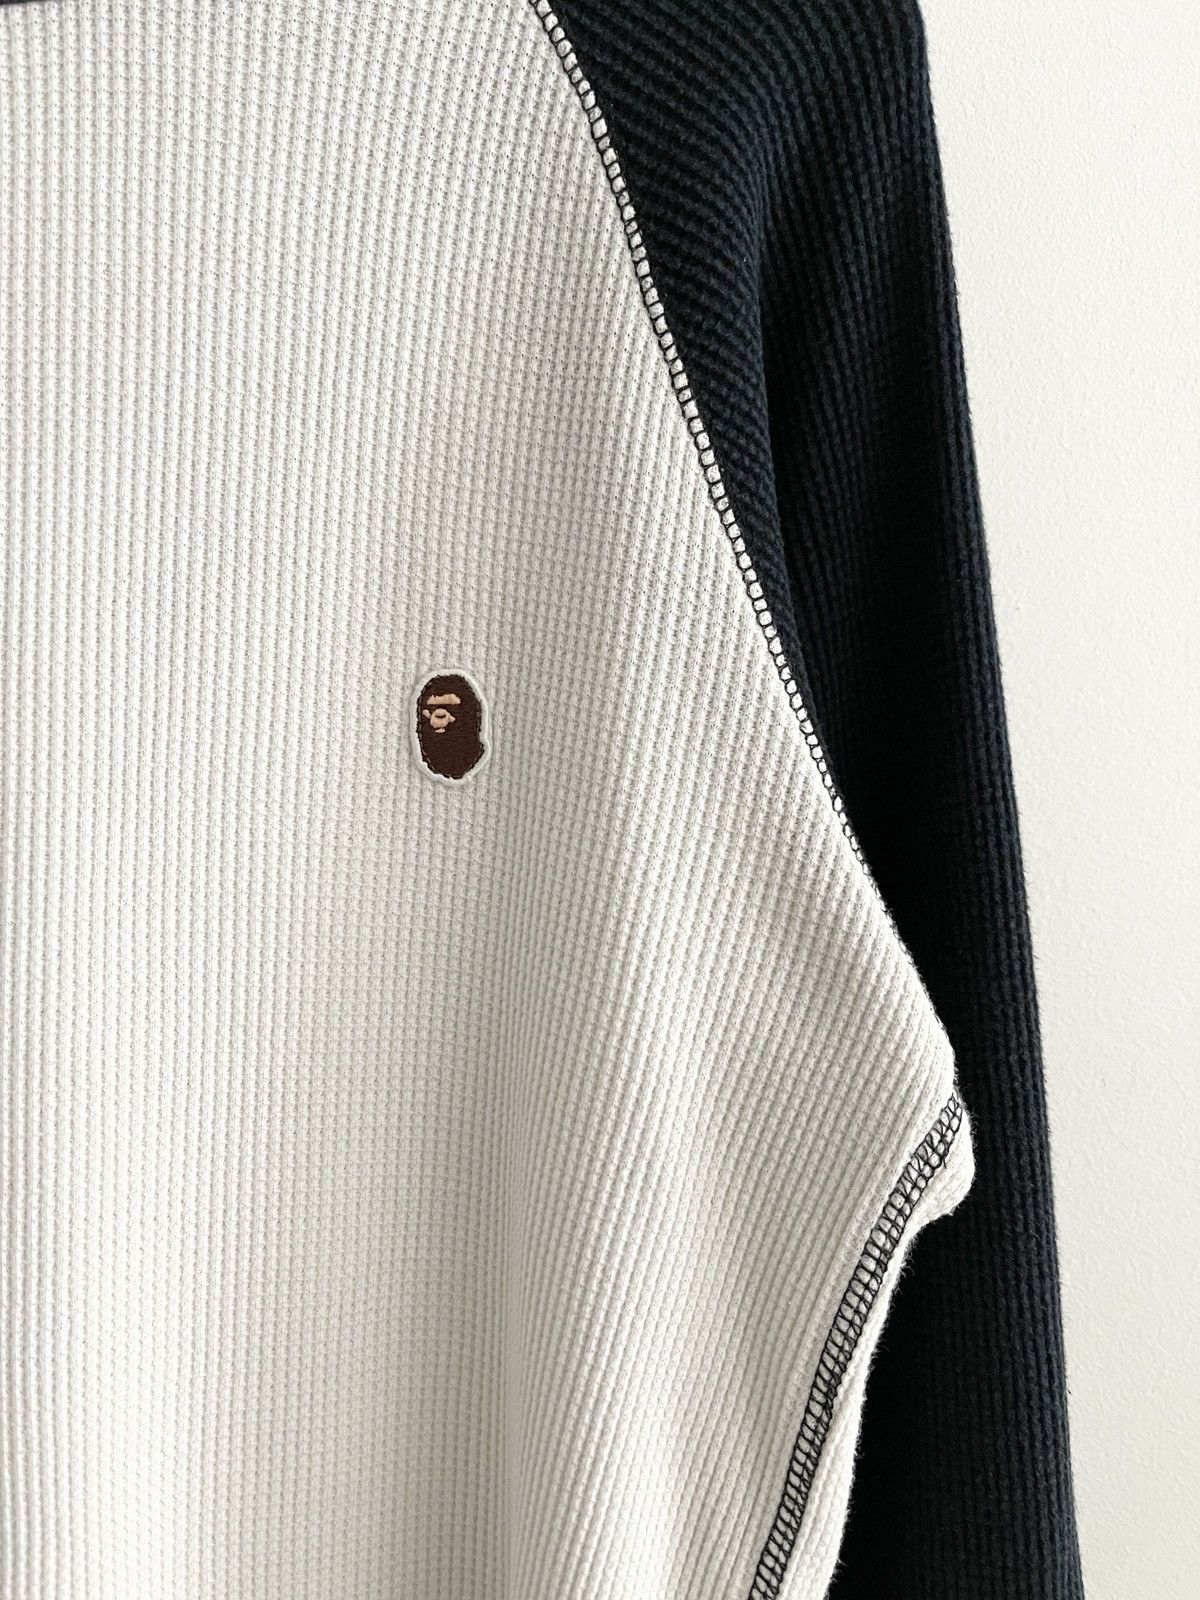 2010s Bape Small Logo Thermal Shirt (M) - 4